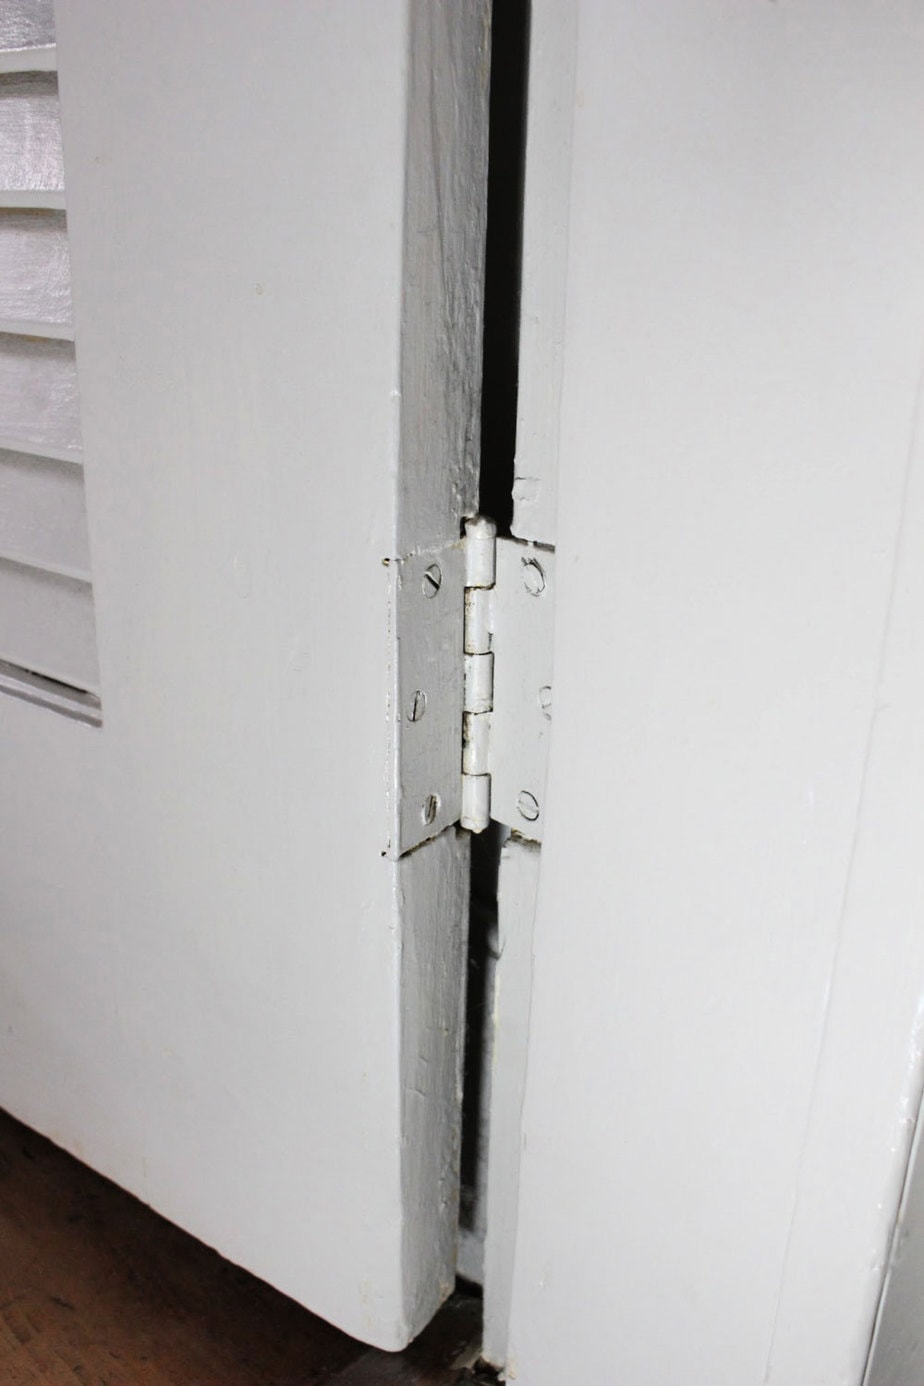 painted hinge on door